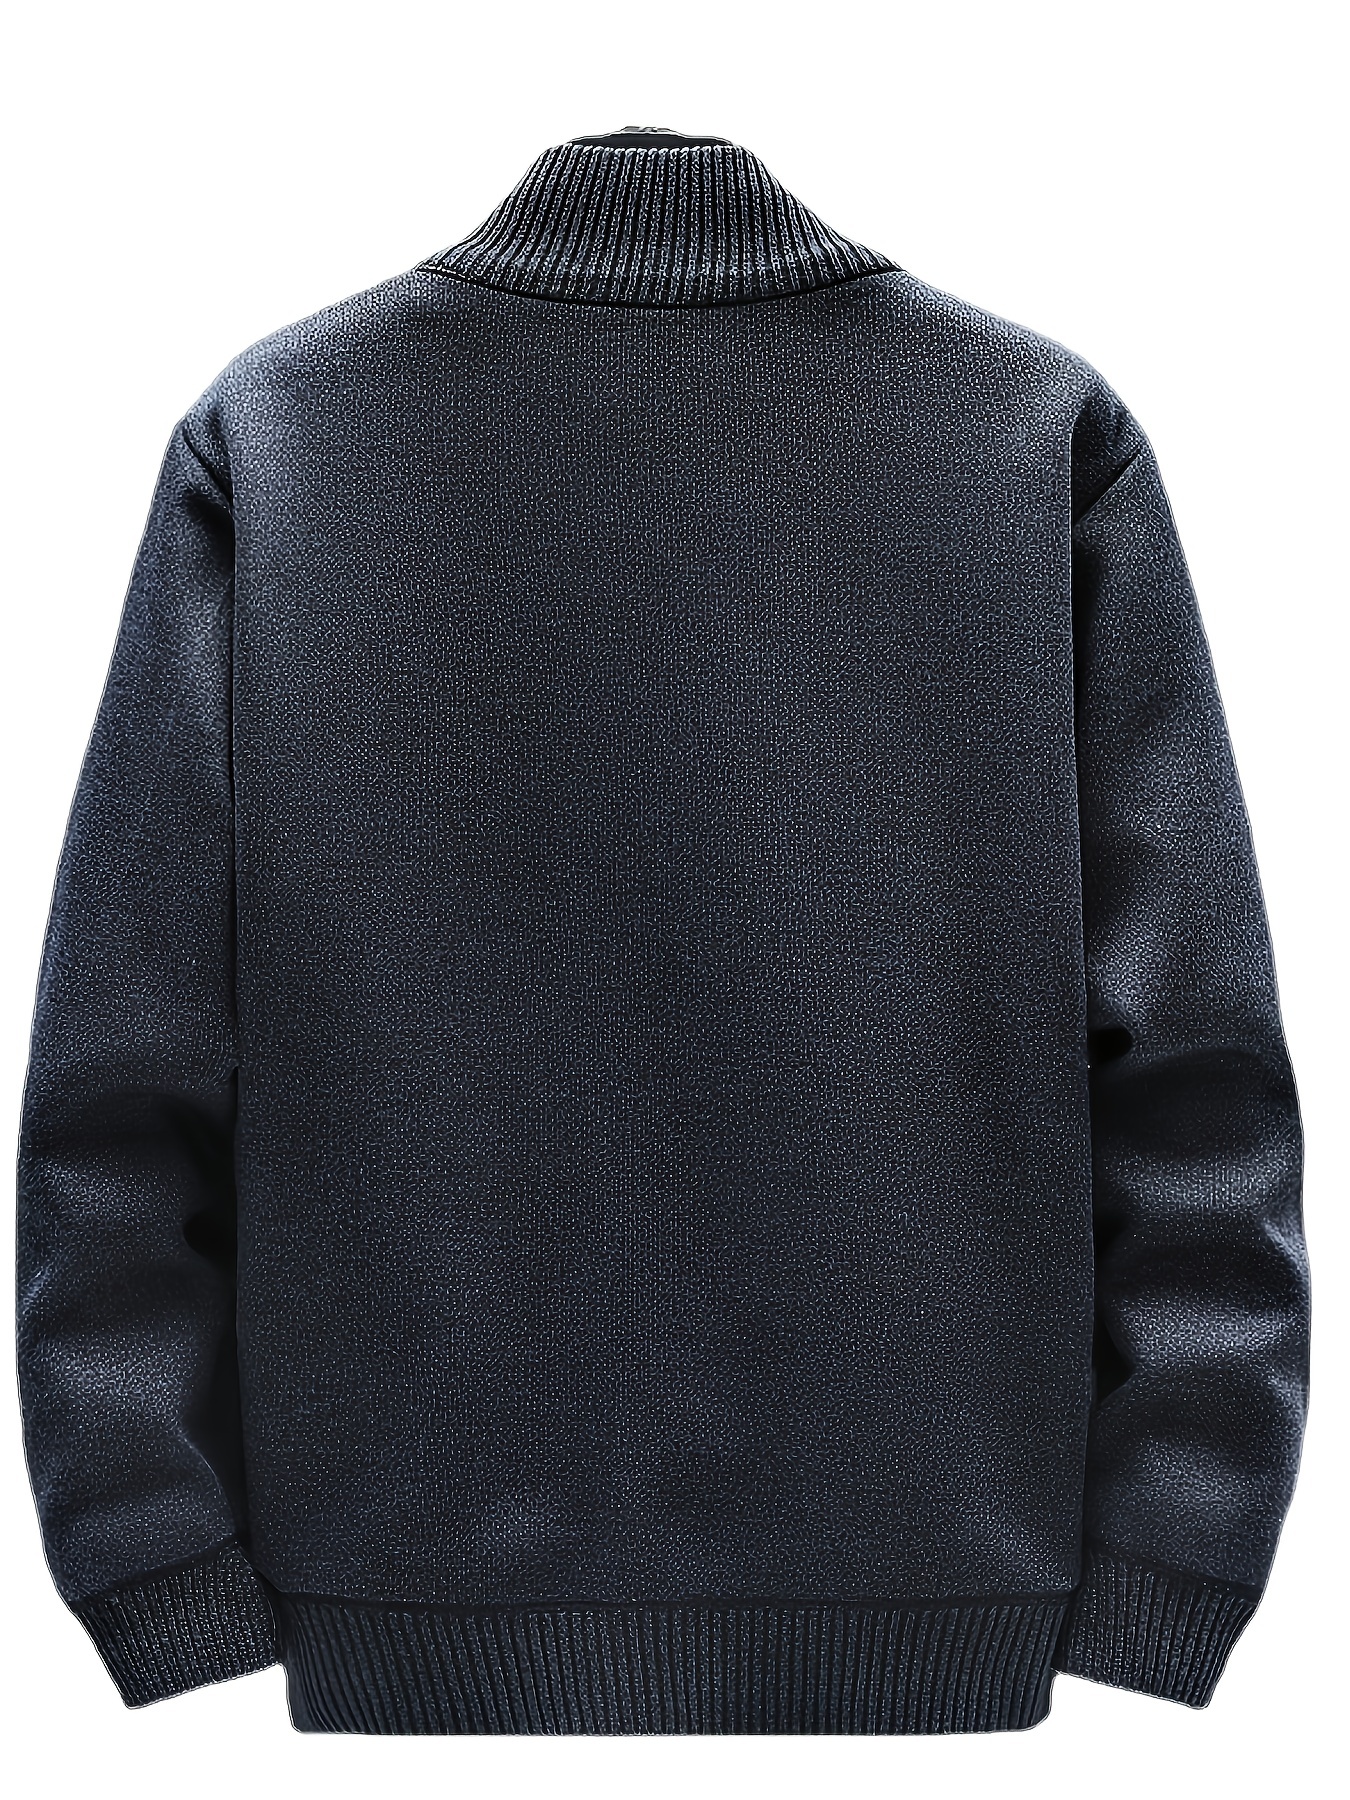 Cárdigan de suéter con cremallera a la moda para hombre, cuello alto,  tejido de manga larga Fridja po4648